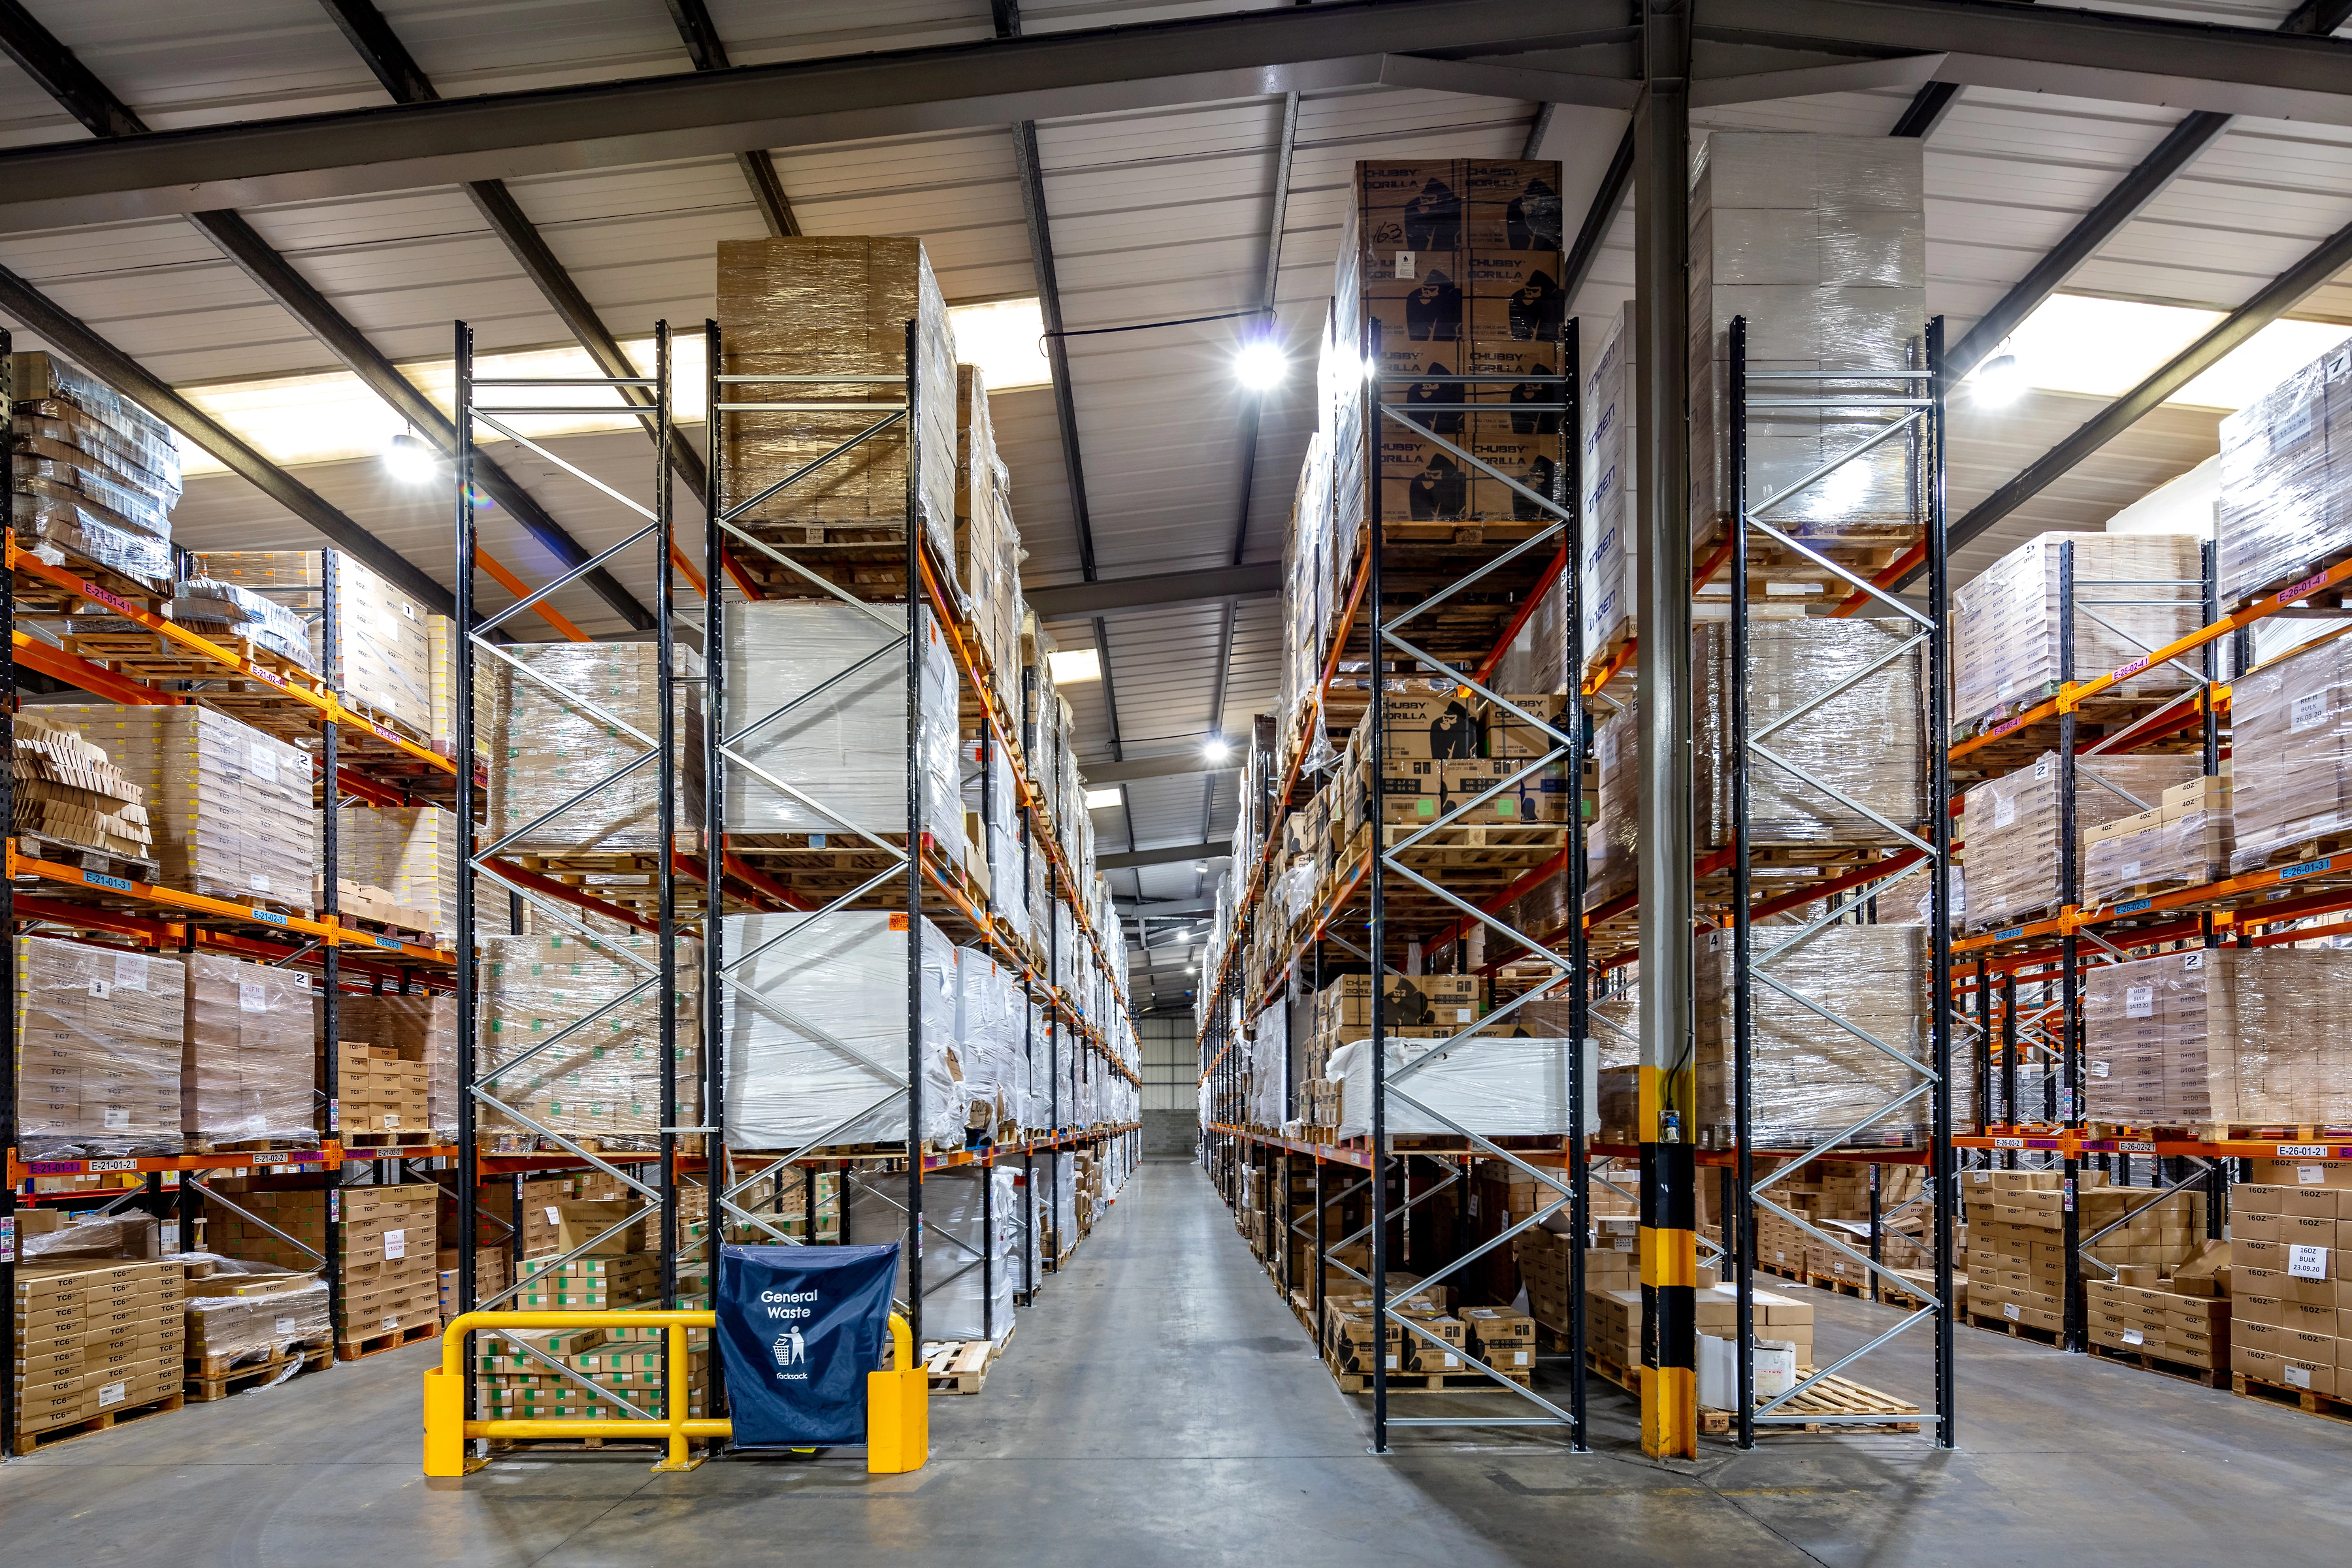 Origin's new warehouse facility in Scunthorpe